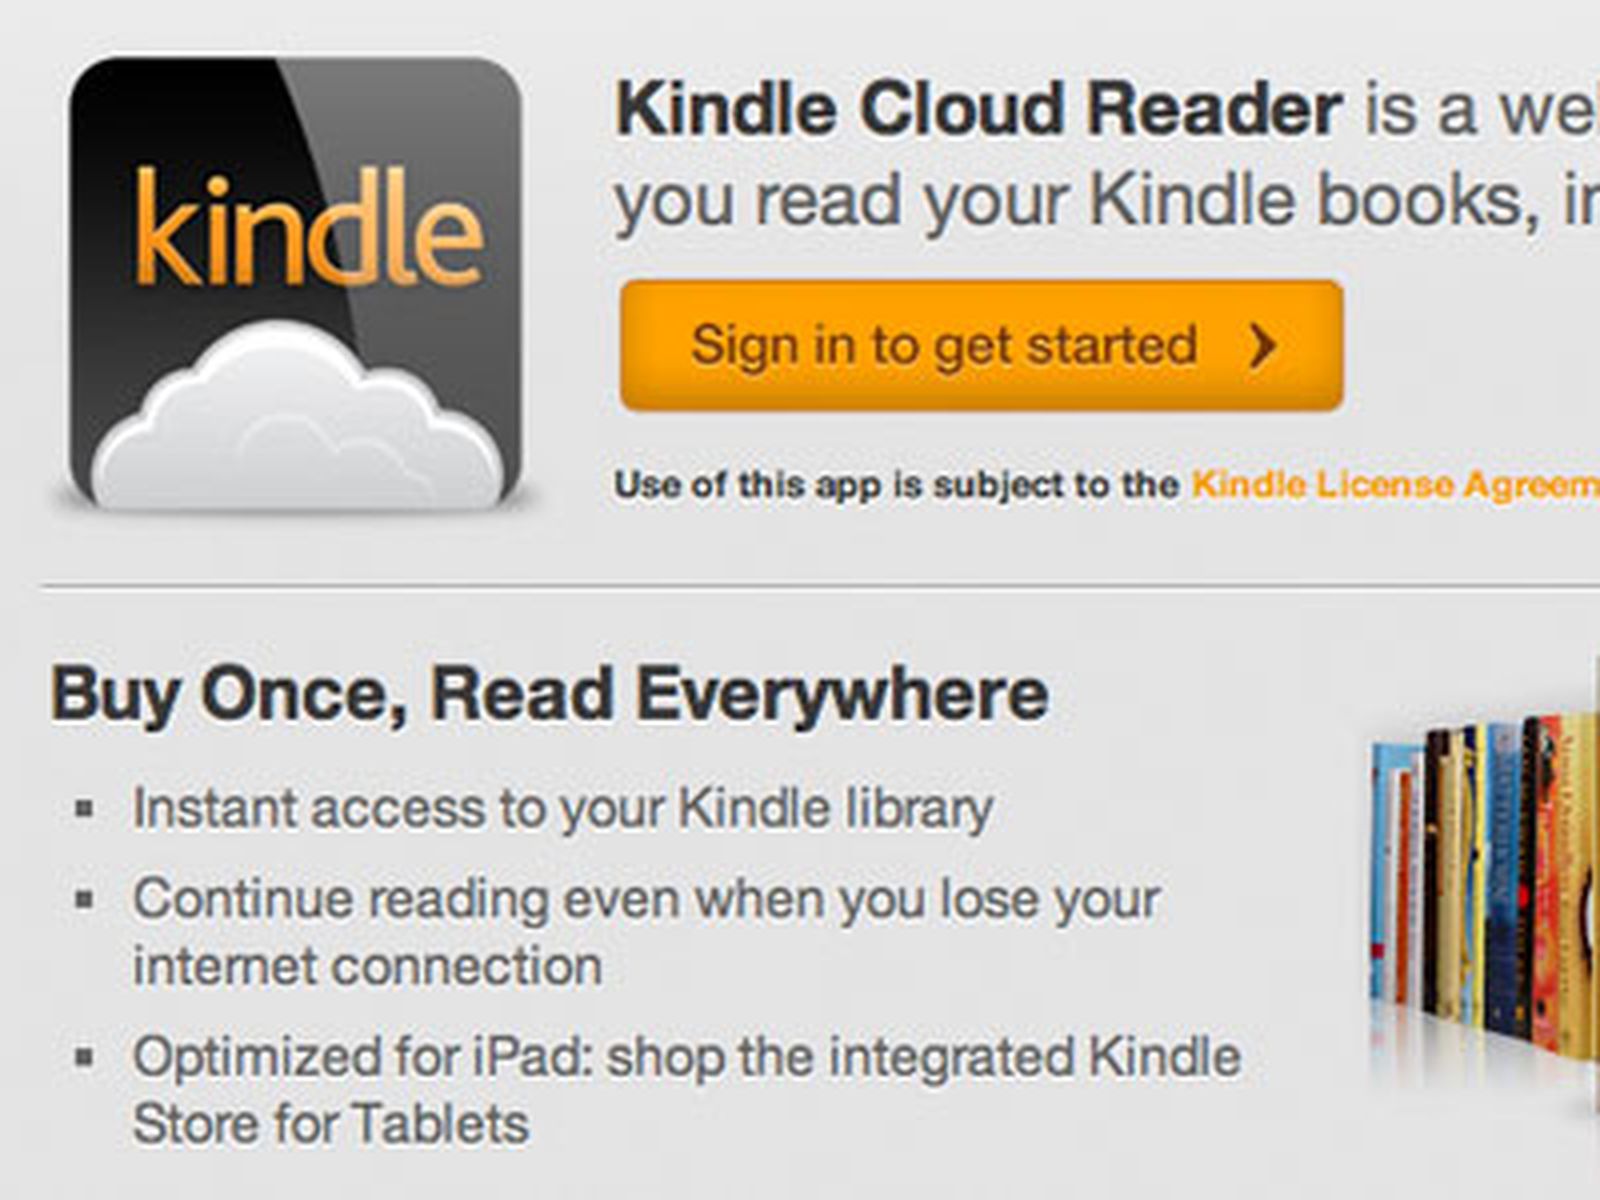 install amazon cloud kindle reader app